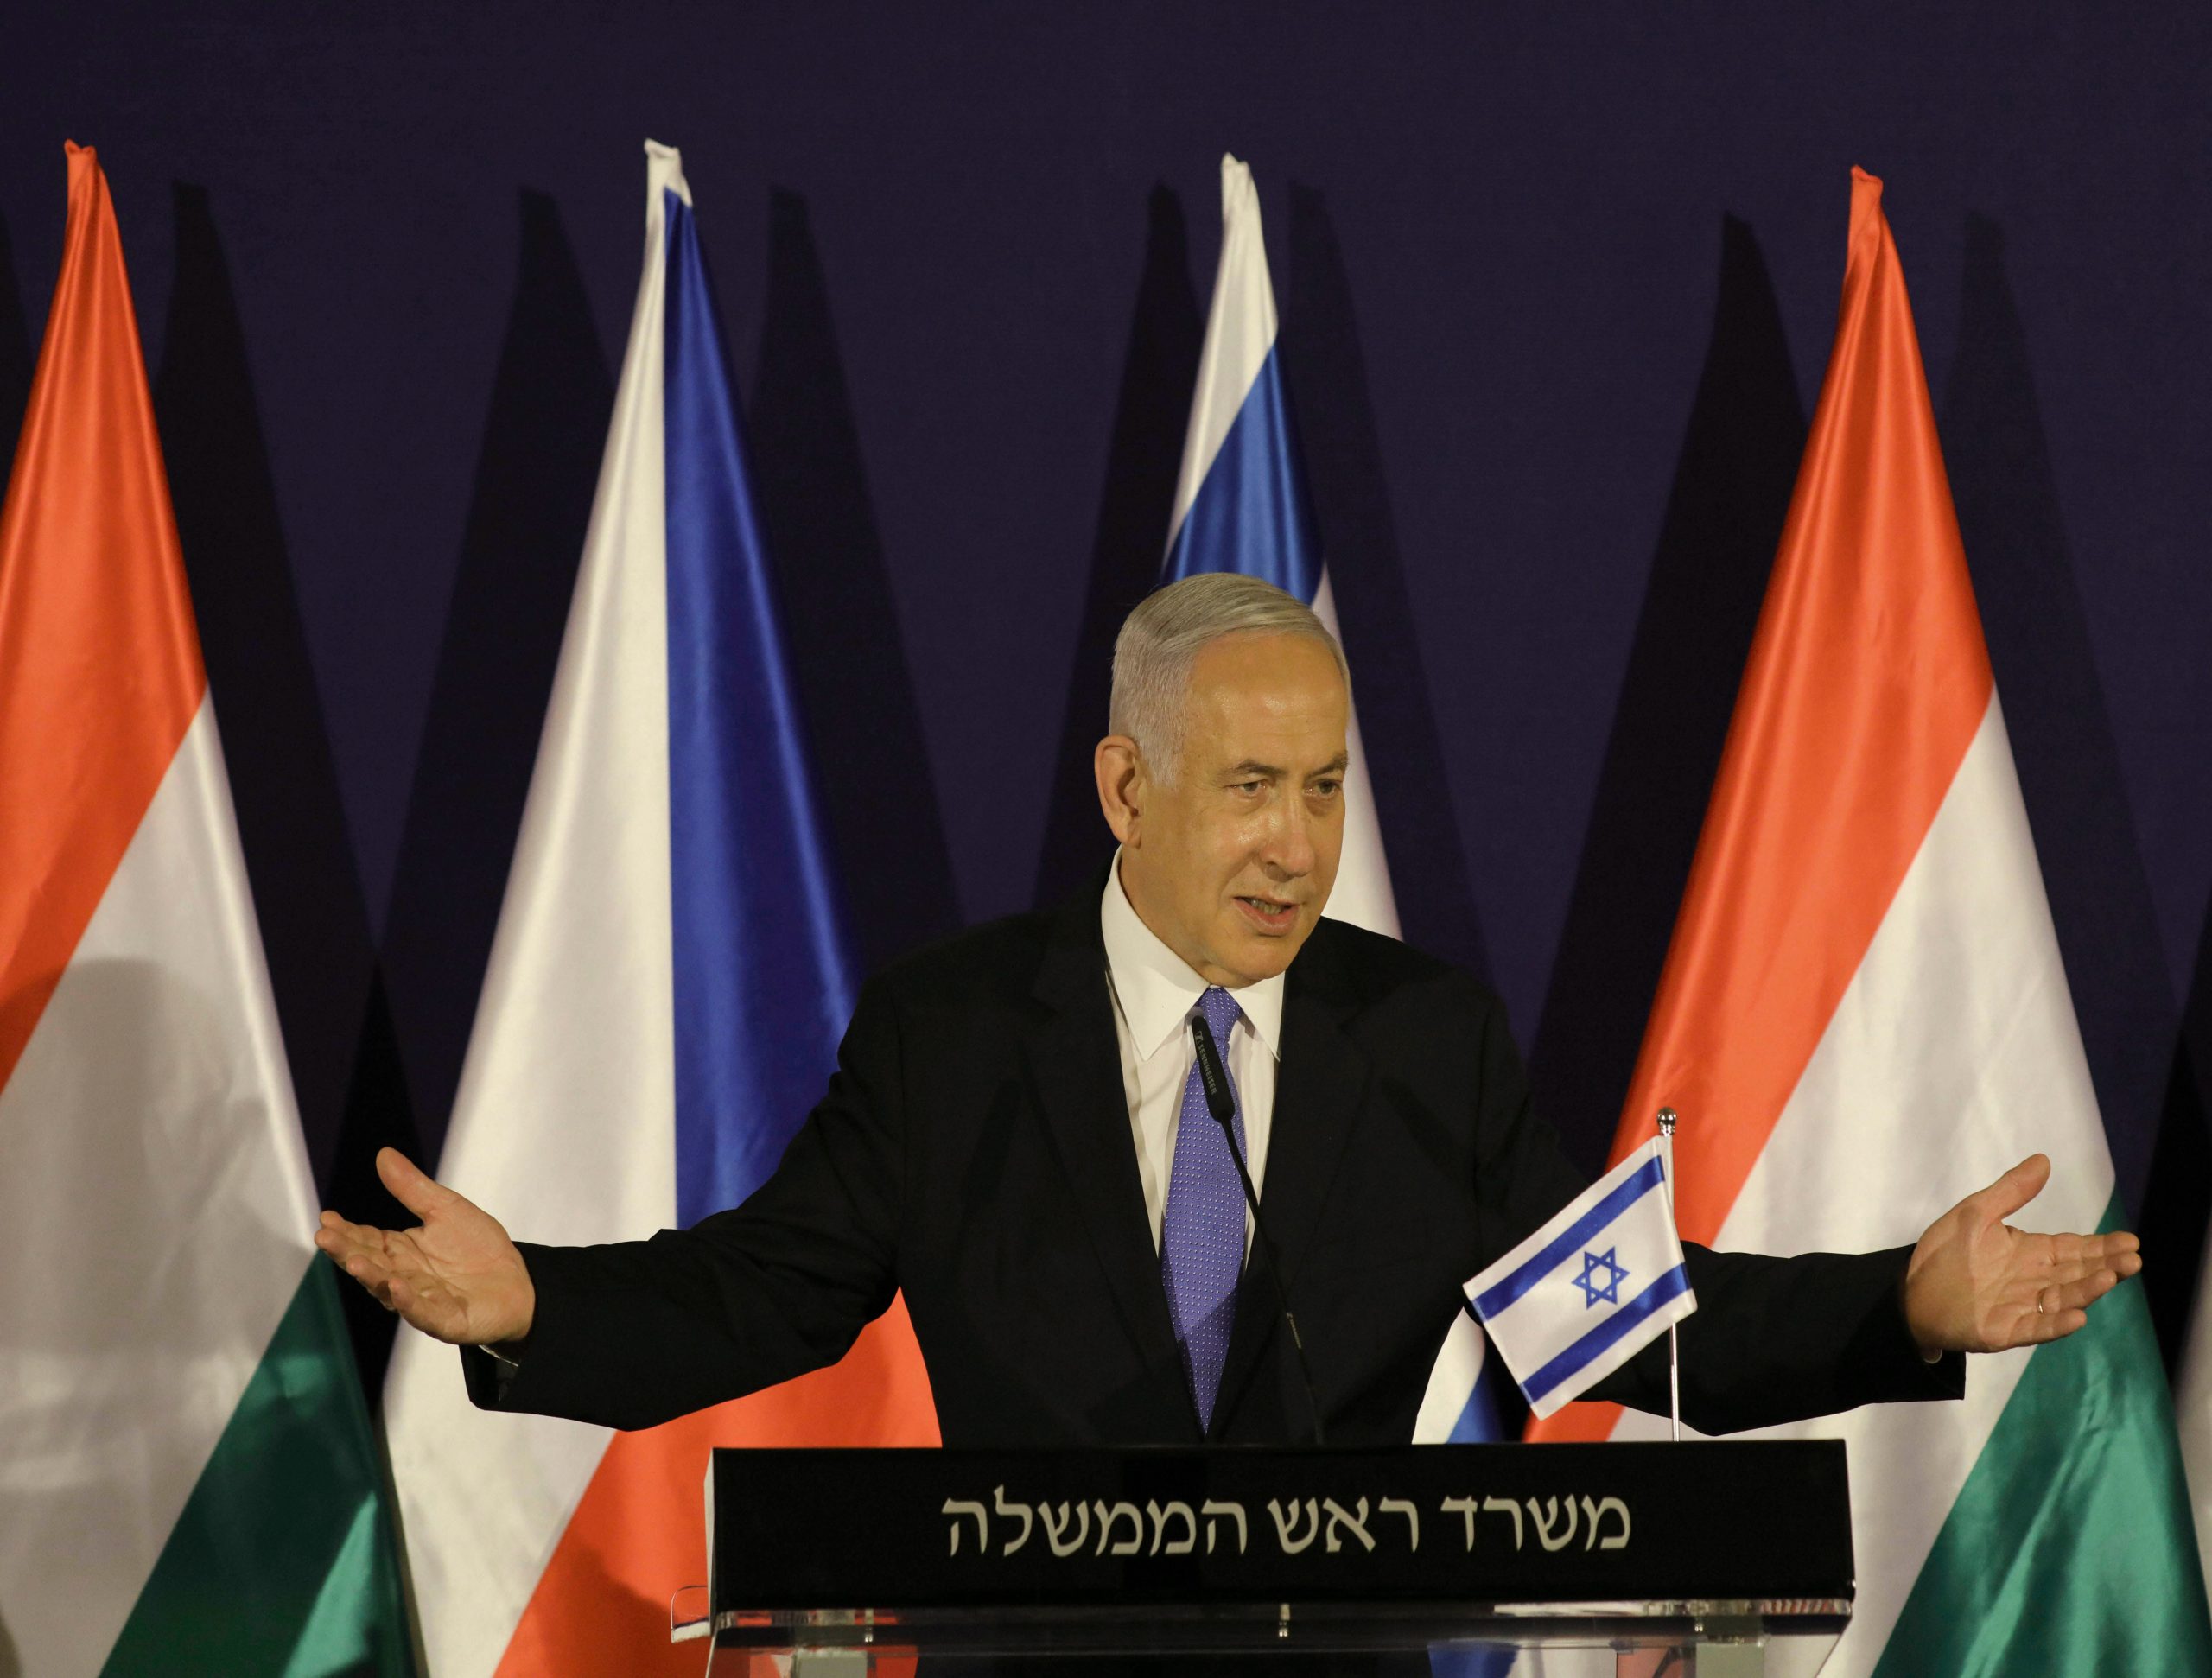 Benjamin Netanyahu mocks Joe Biden using ‘doctored video’ as fodder